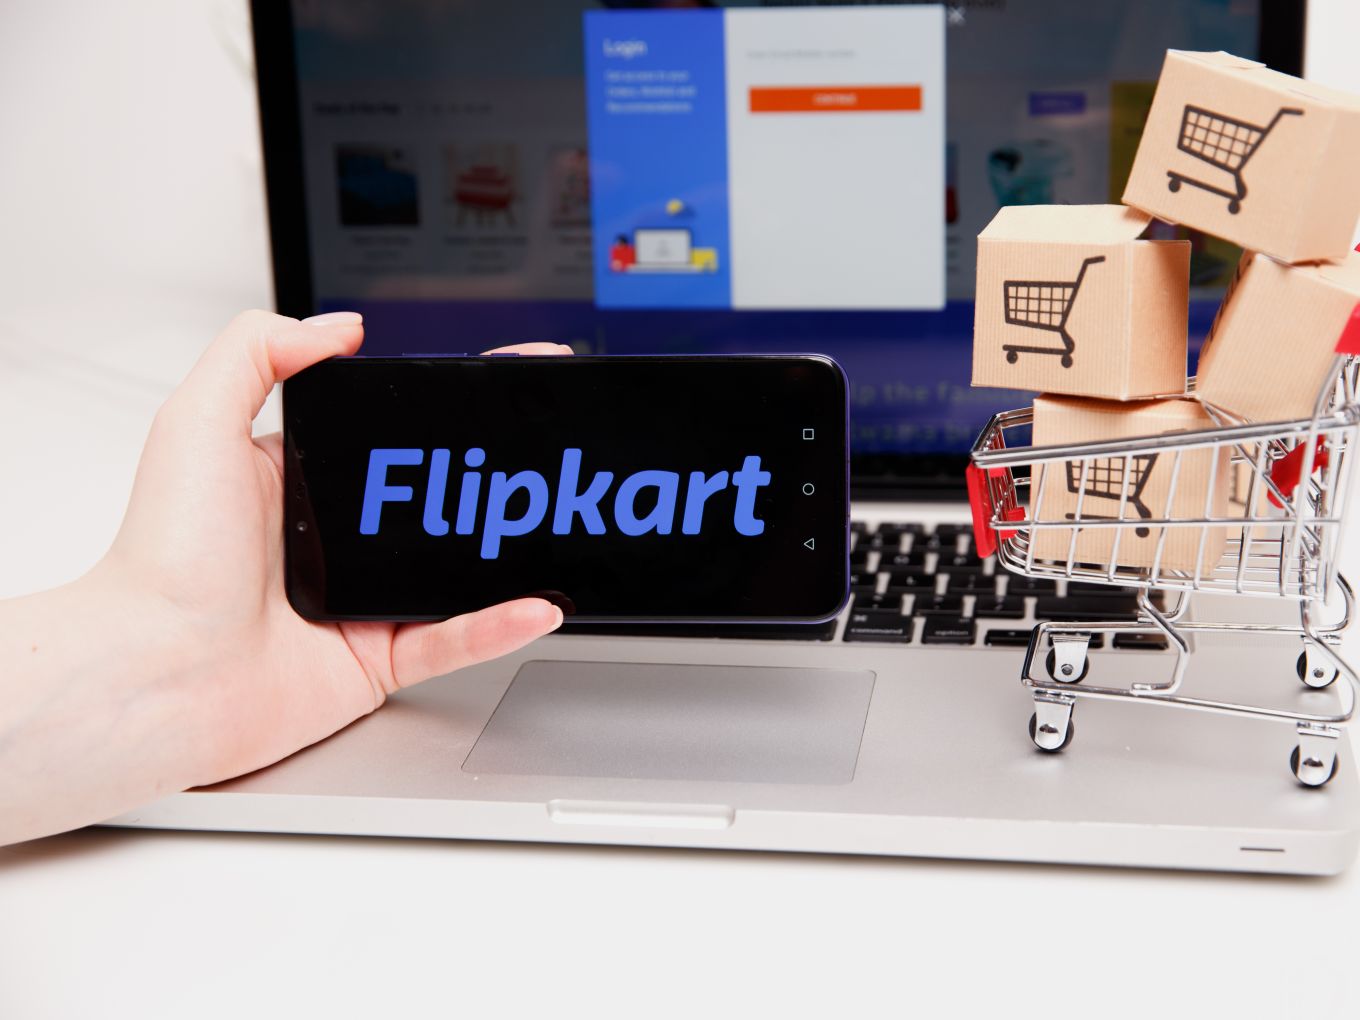 Flipkart To Launch First Offline Furniture Retail Store For FurniSure